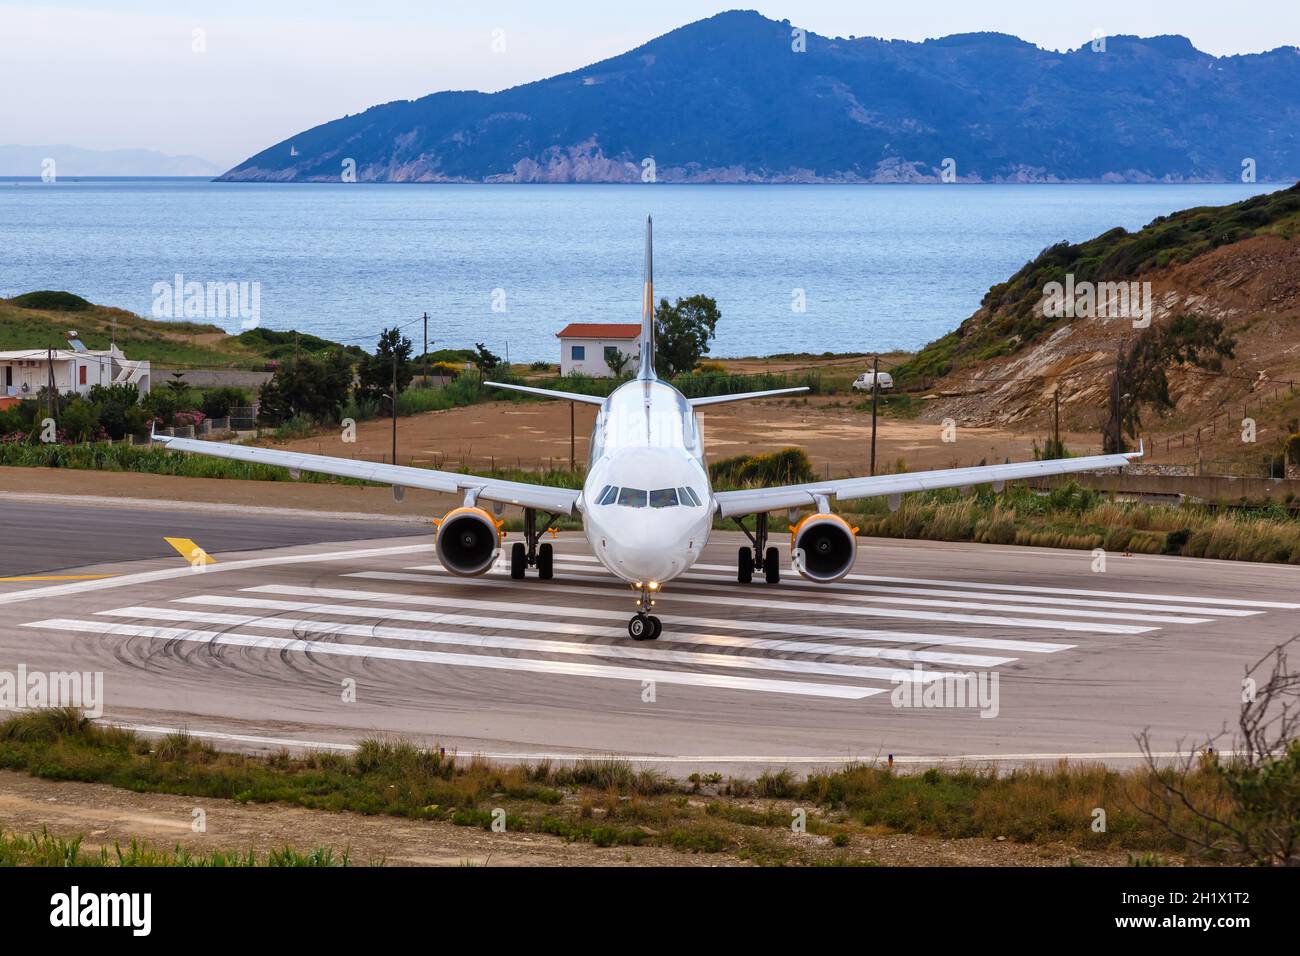 Skiathos, Greece - June 5, 2016: Thomas Cook Airlines Airbus A321 airplane at Skiathos airport (JSI) in Greece. Stock Photo